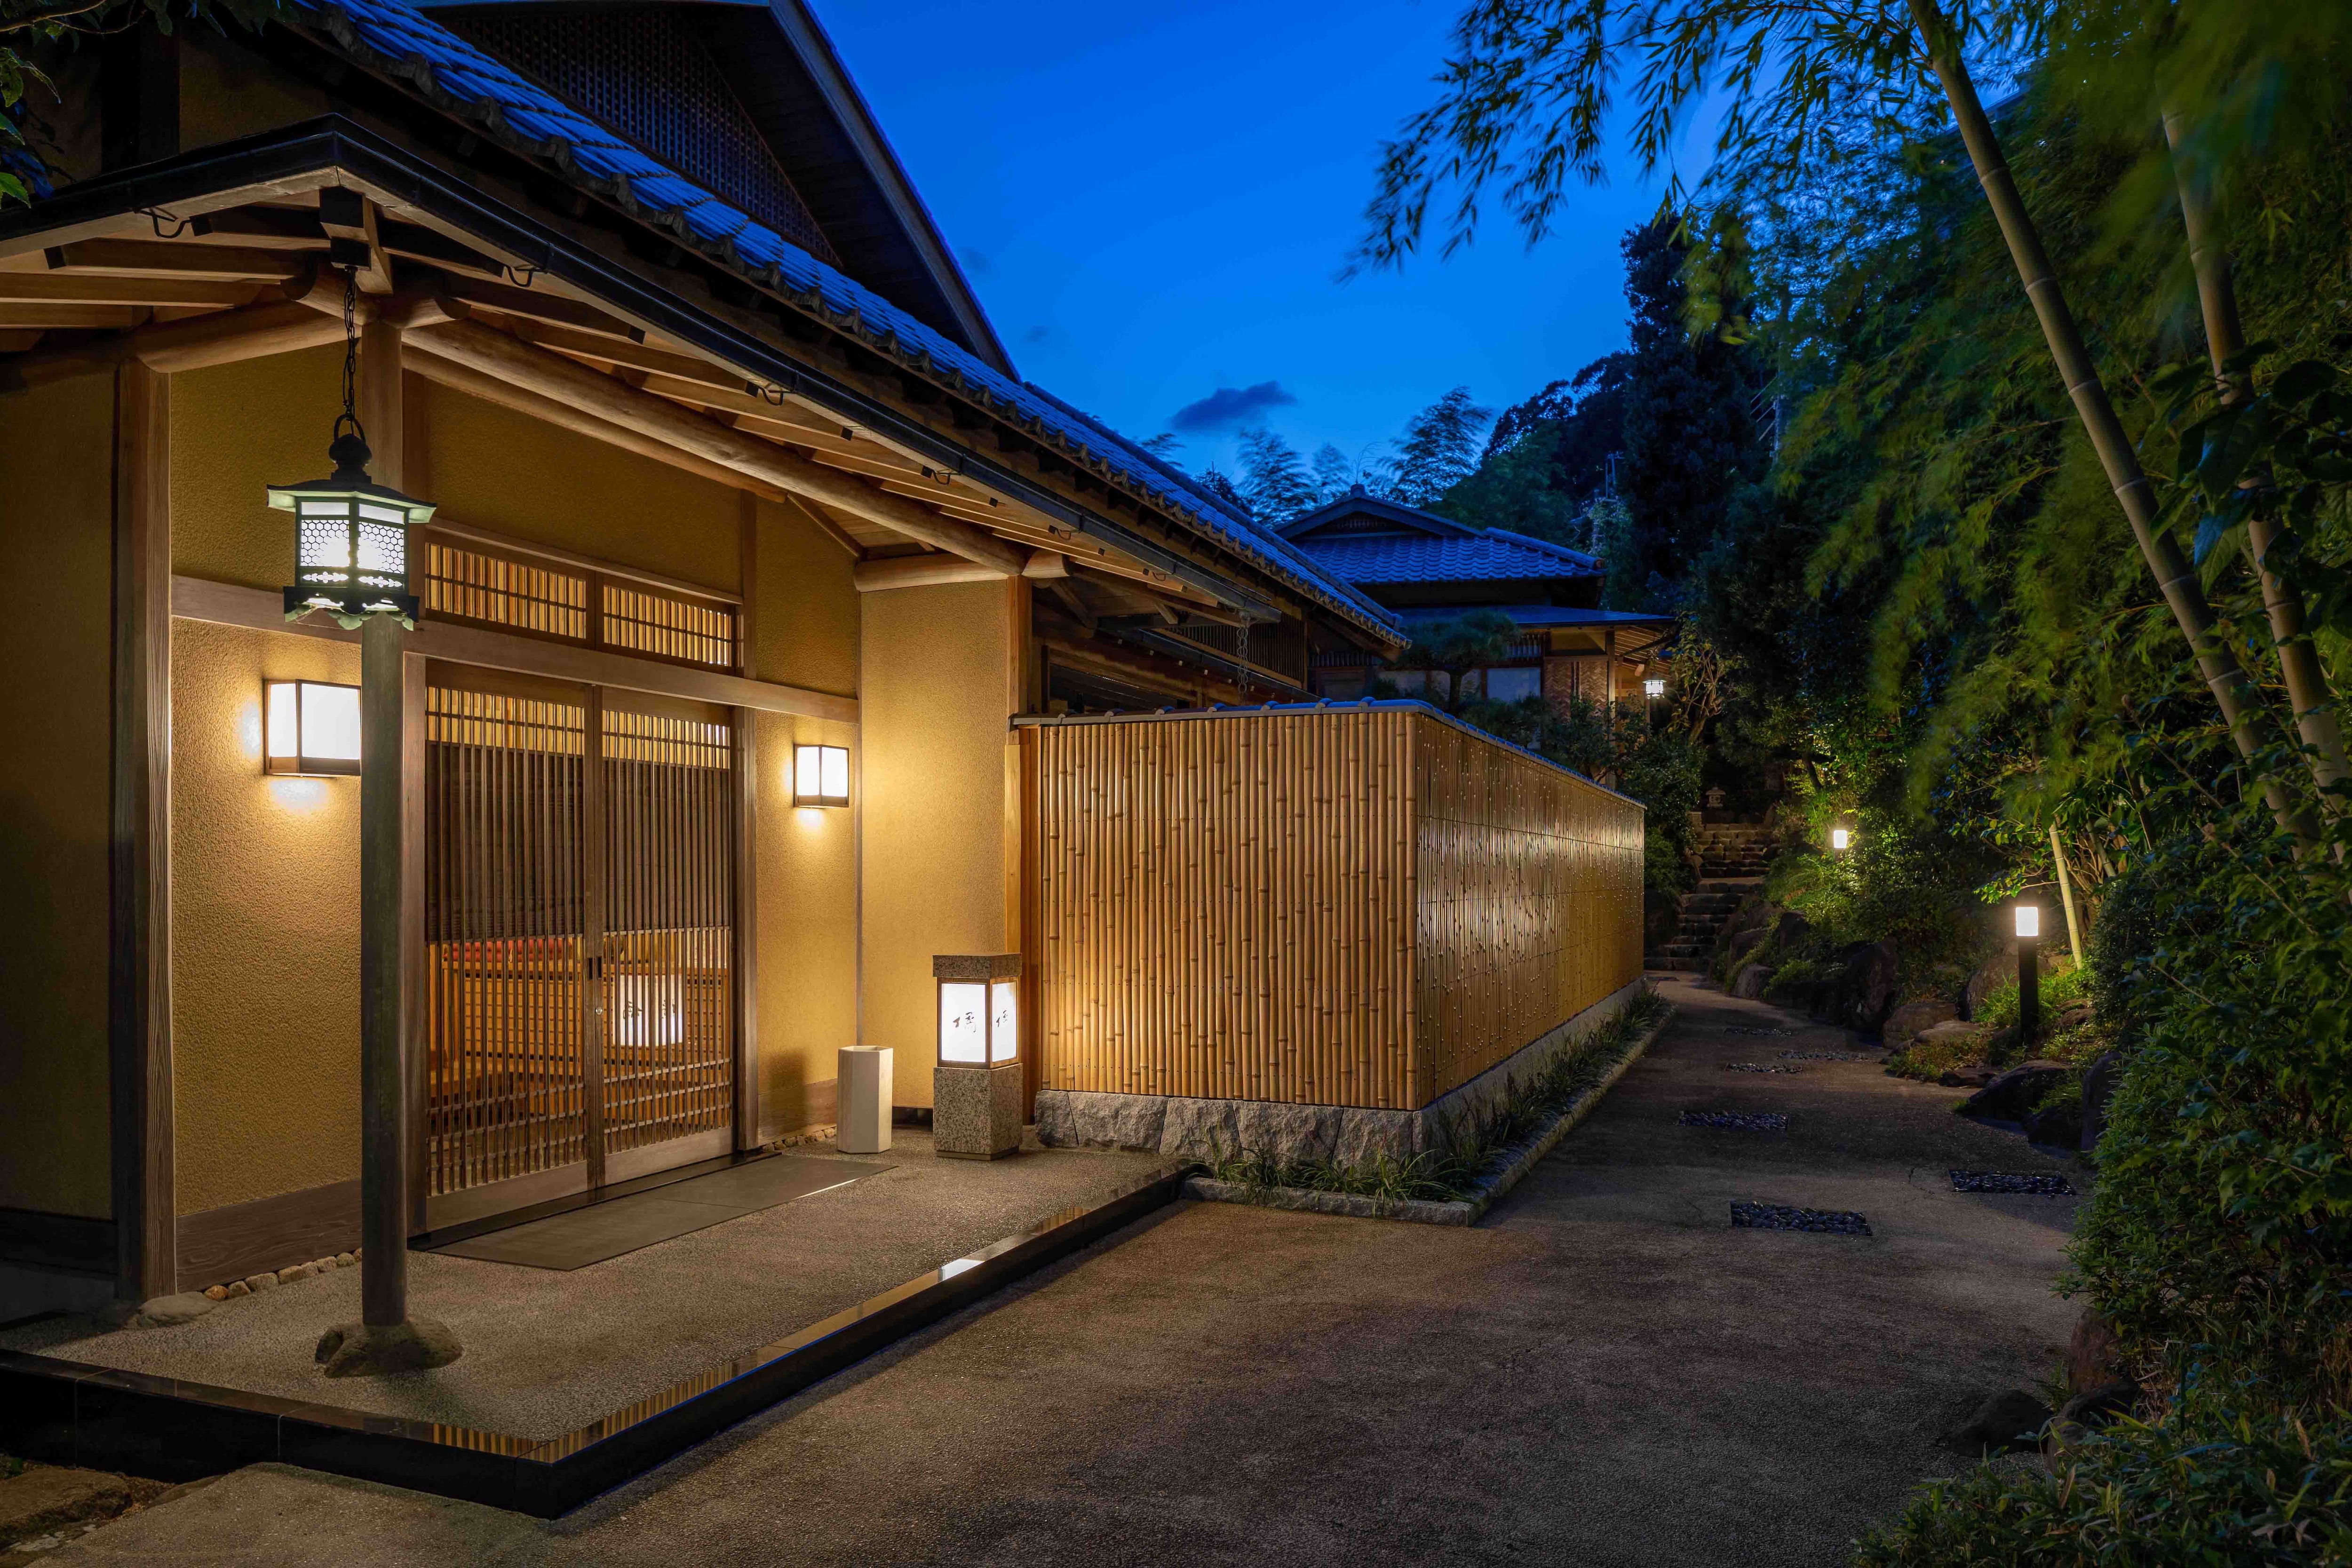 Kamar tamu terpisah, pintu masuk Tachibana, pemandangan malam